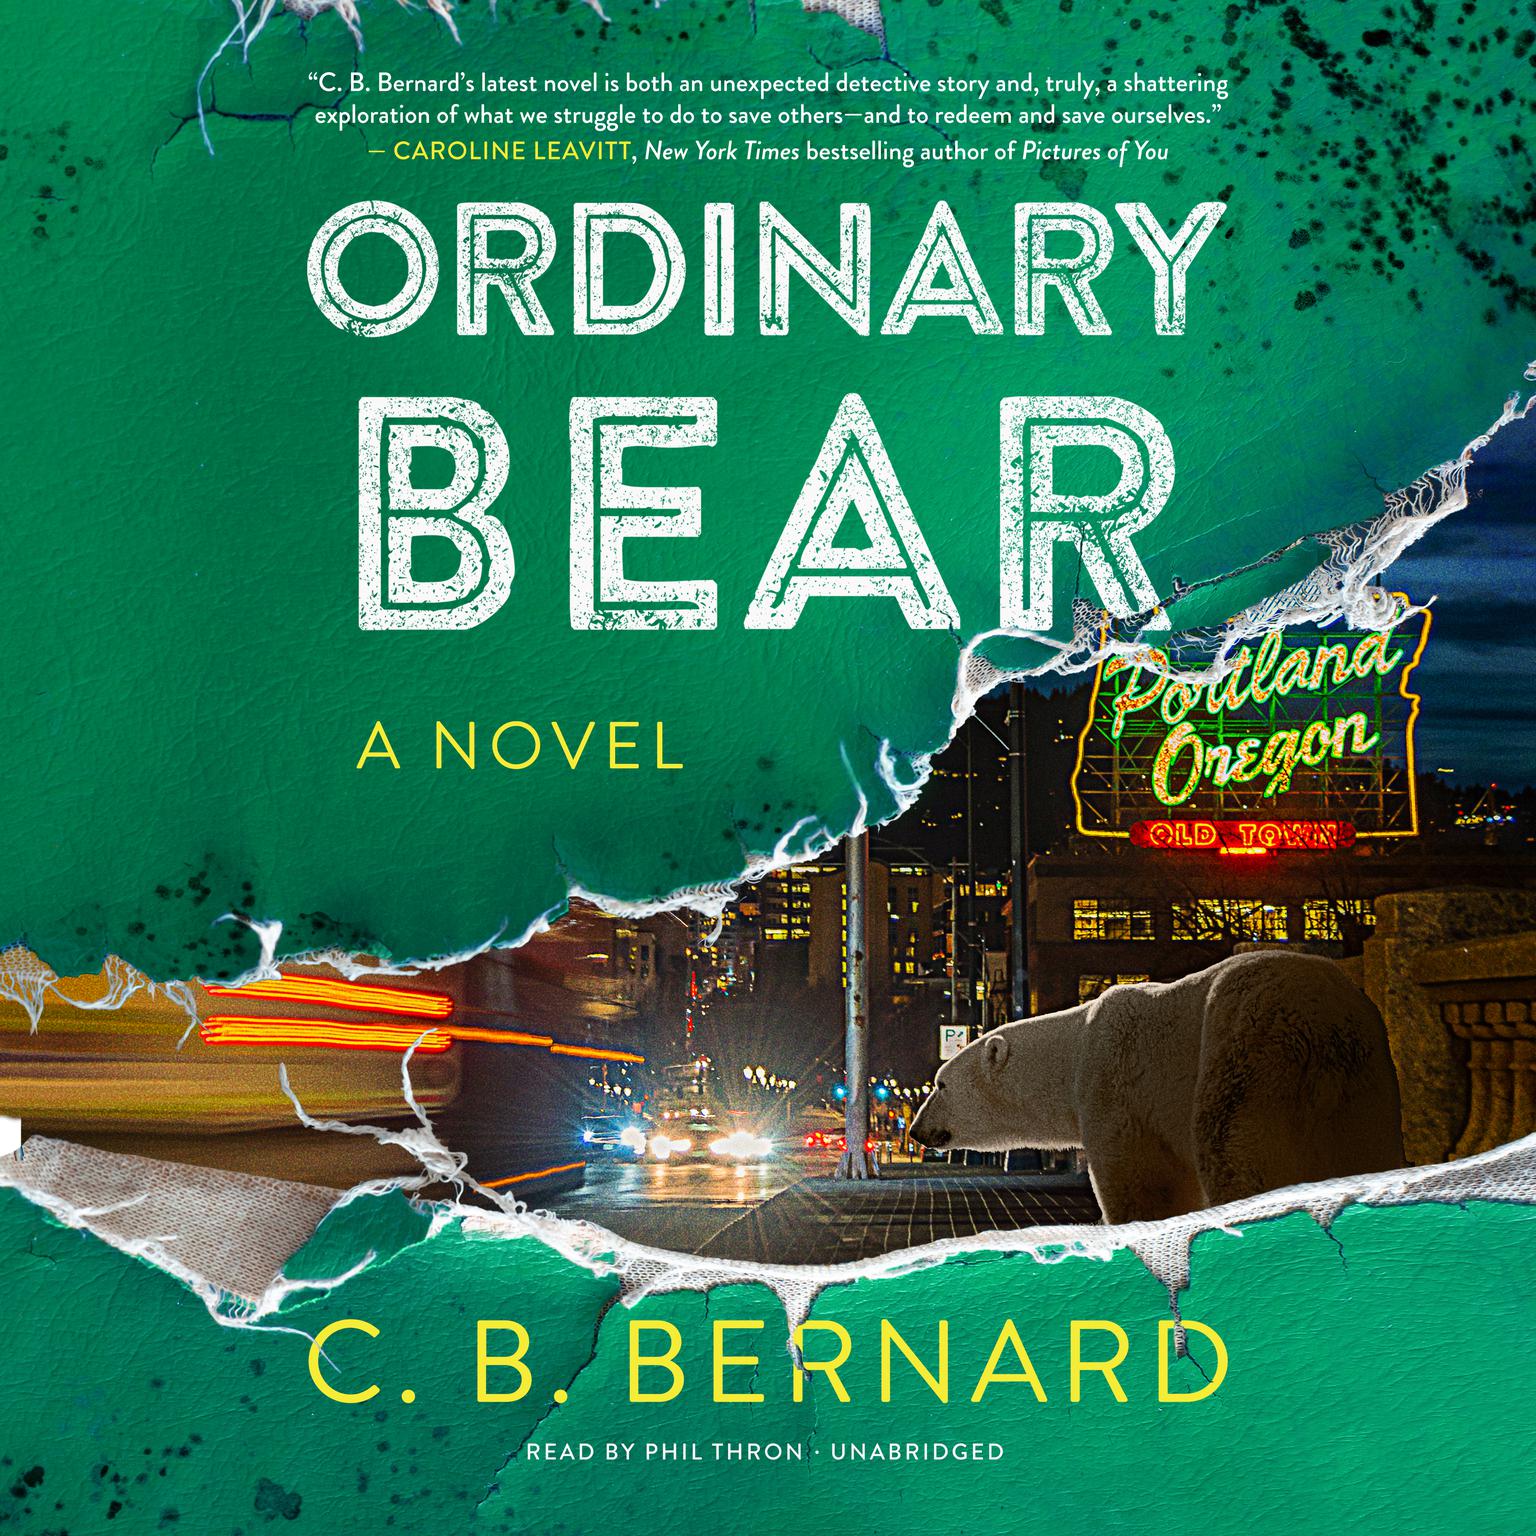 Ordinary Bear: A Novel Audiobook, by C. B. Bernard